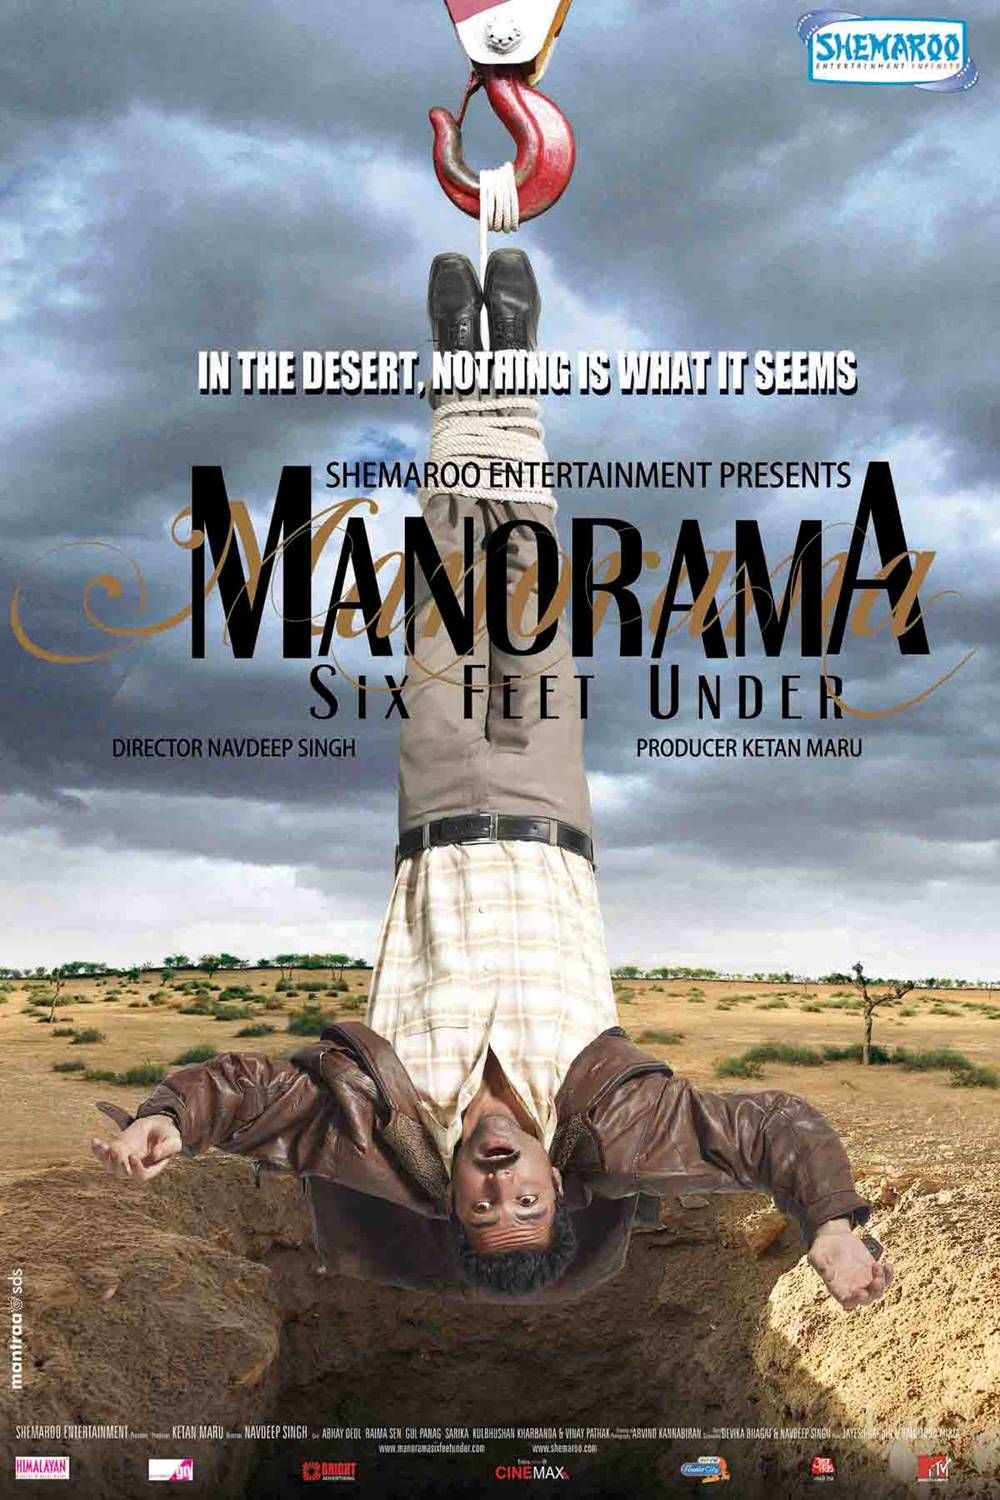 manorama six feet under director